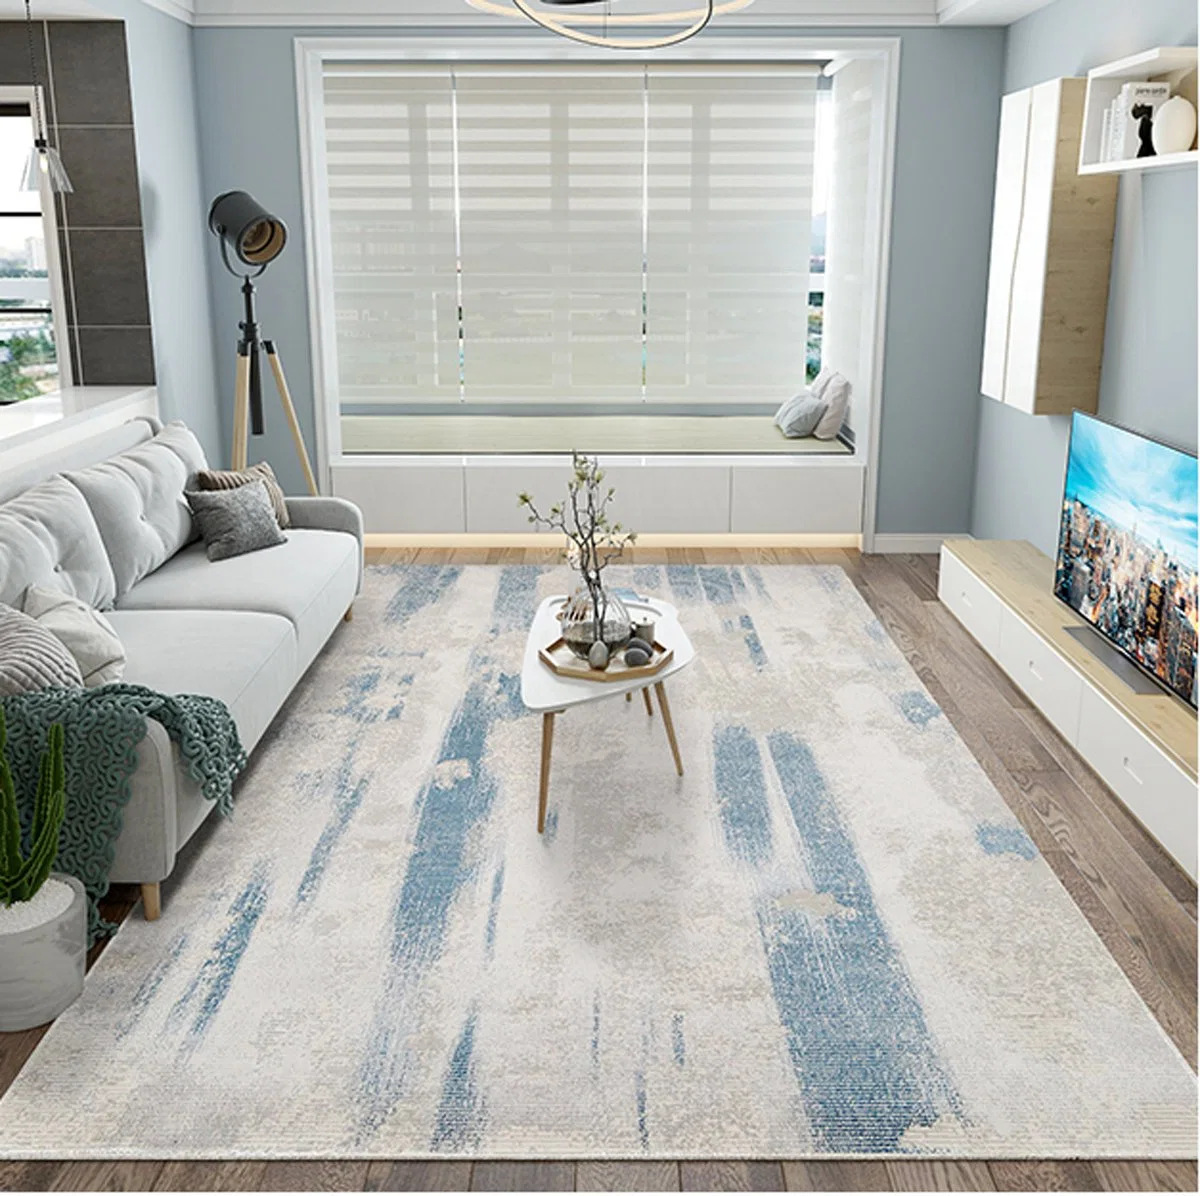 Series Akr - Wilton Area Carpet Factory Wholesale/Supplier for Living Room Bedroom